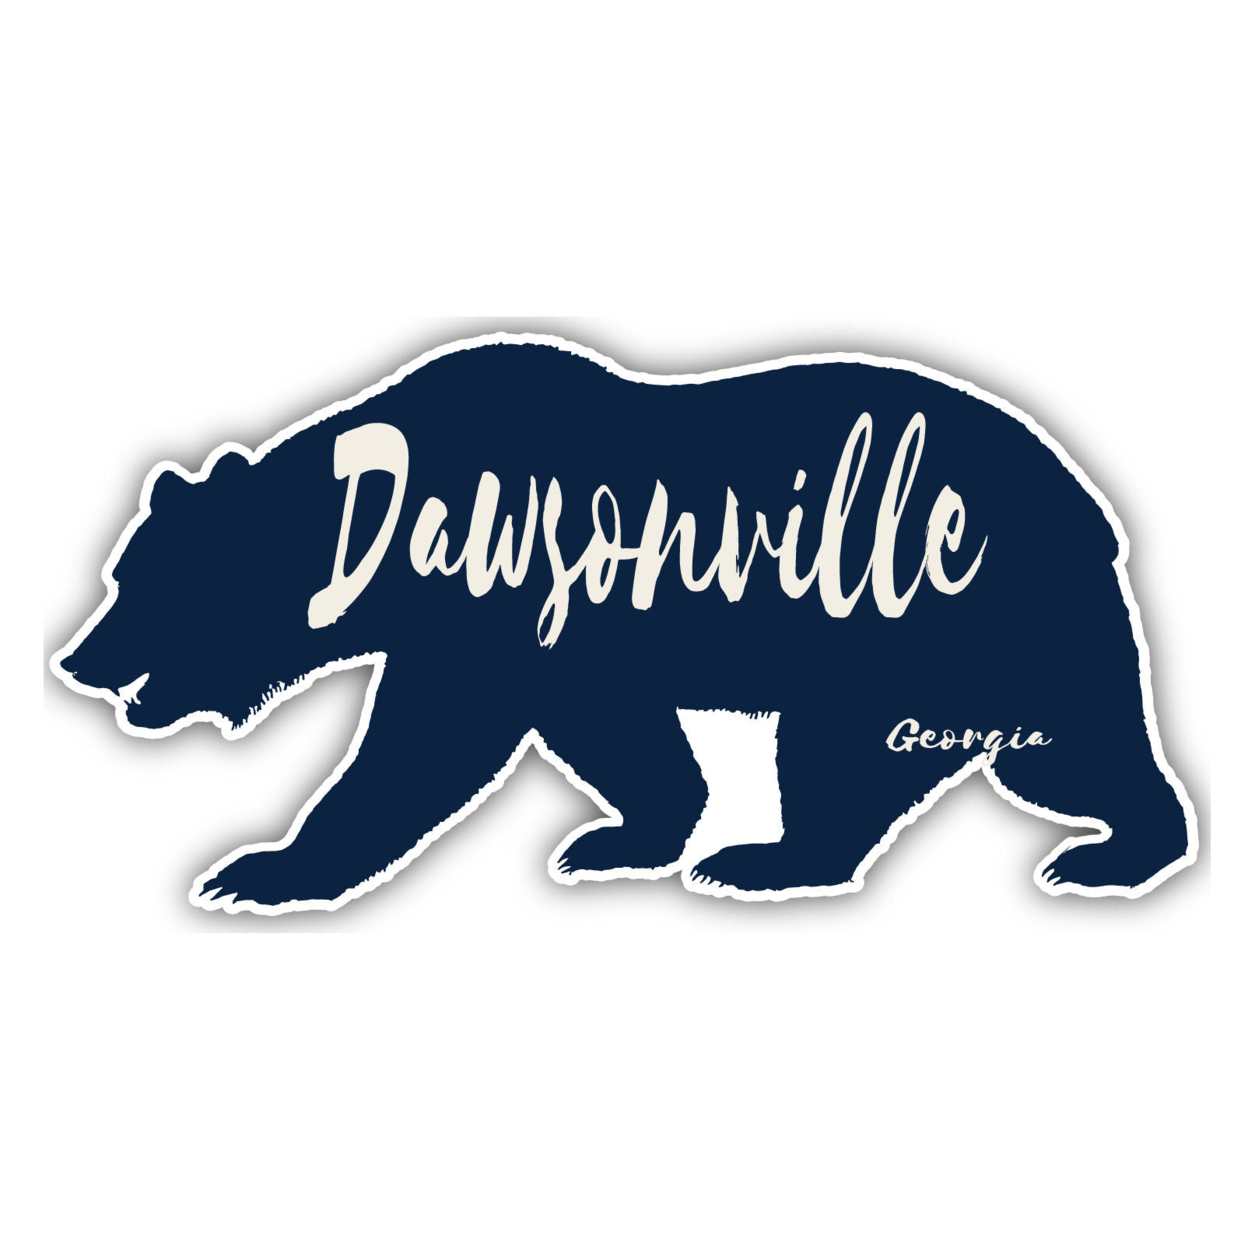 Dawsonville Georgia Souvenir Decorative Stickers (Choose Theme And Size) - Single Unit, 6-Inch, Bear